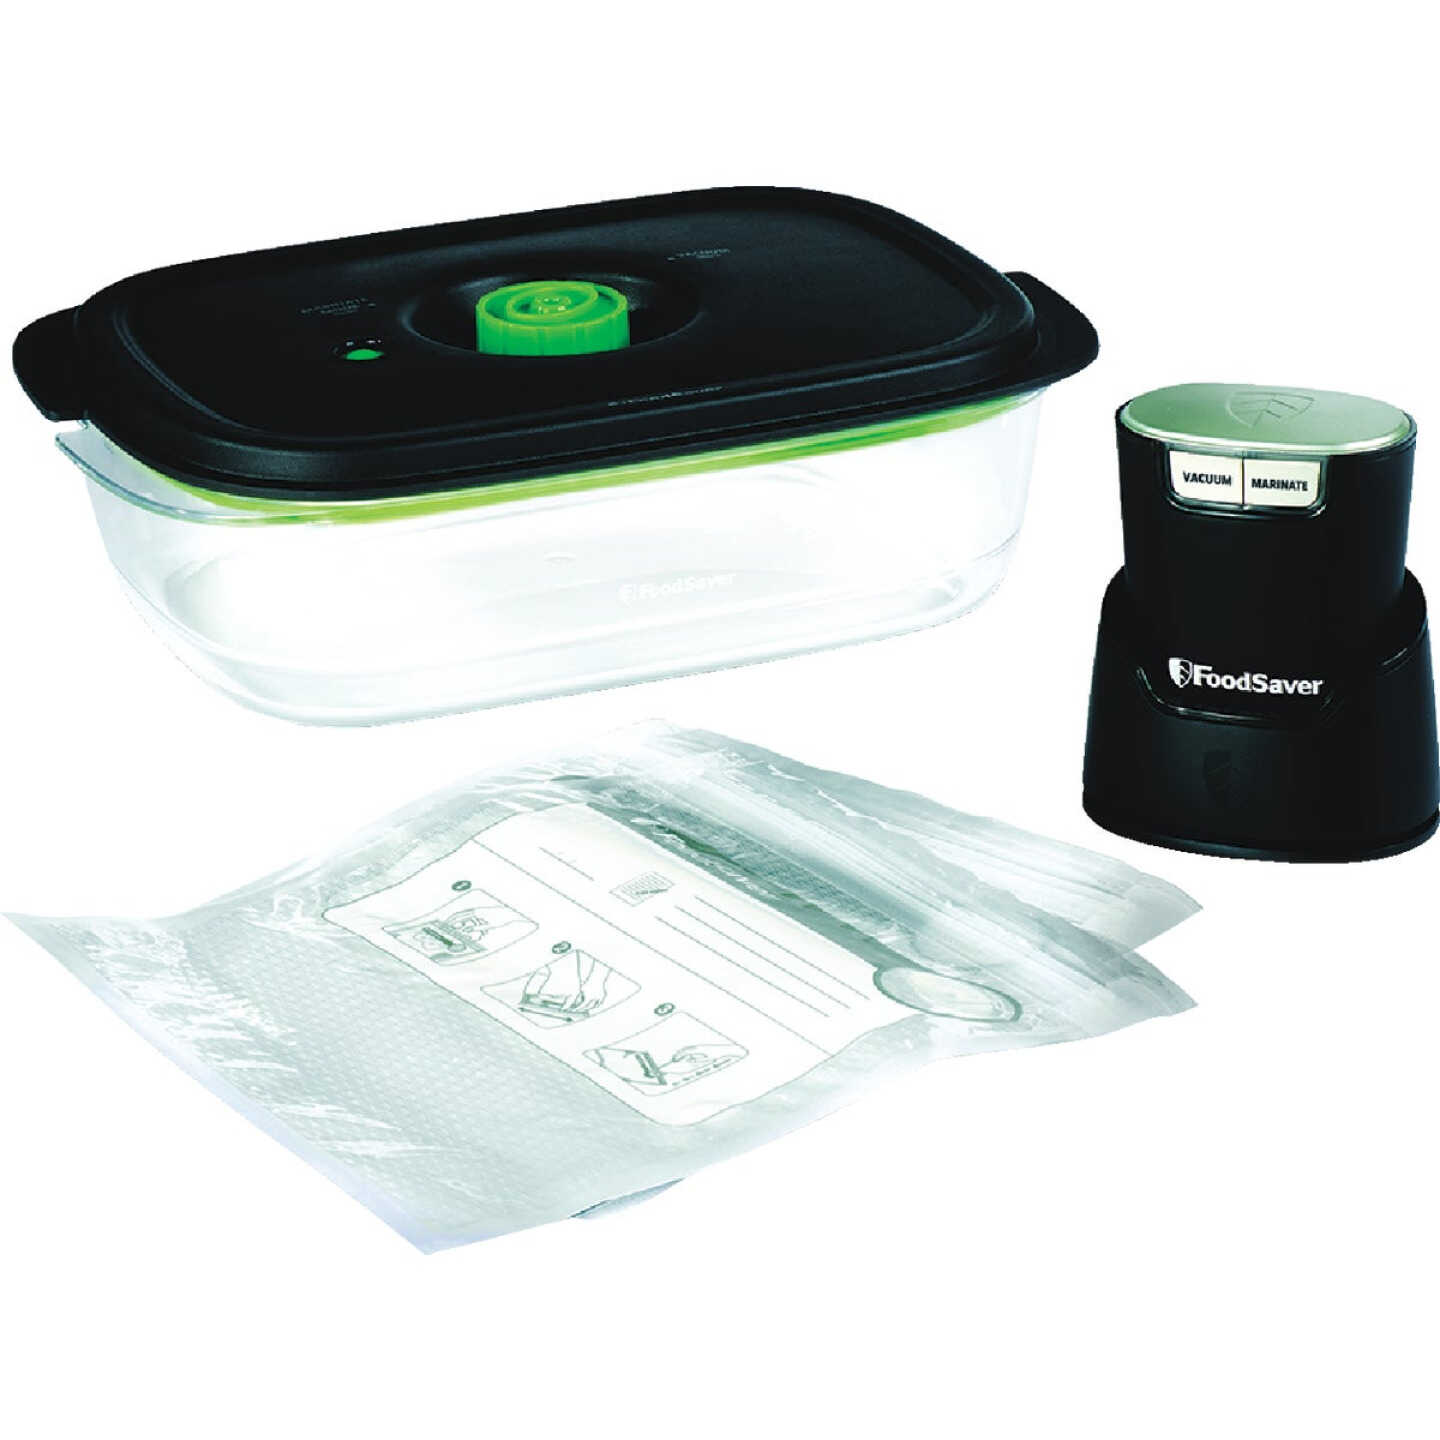 FoodSaver Multi-Use Handheld Cordless Vacuum Sealer - Hoover Hardware